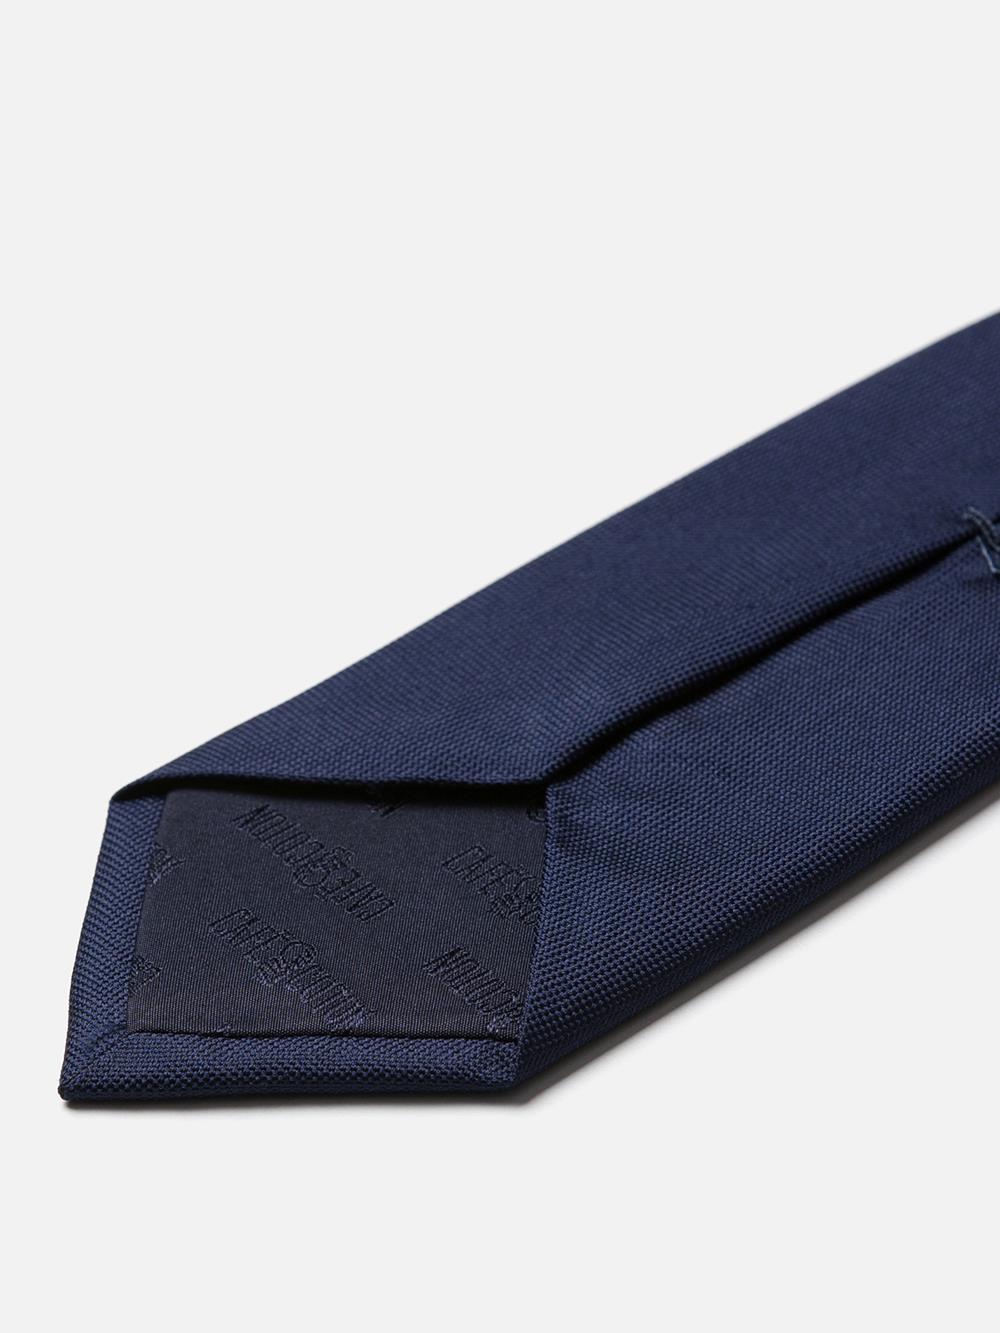 Krawatte aus mikrogeflochtener Seide in navy